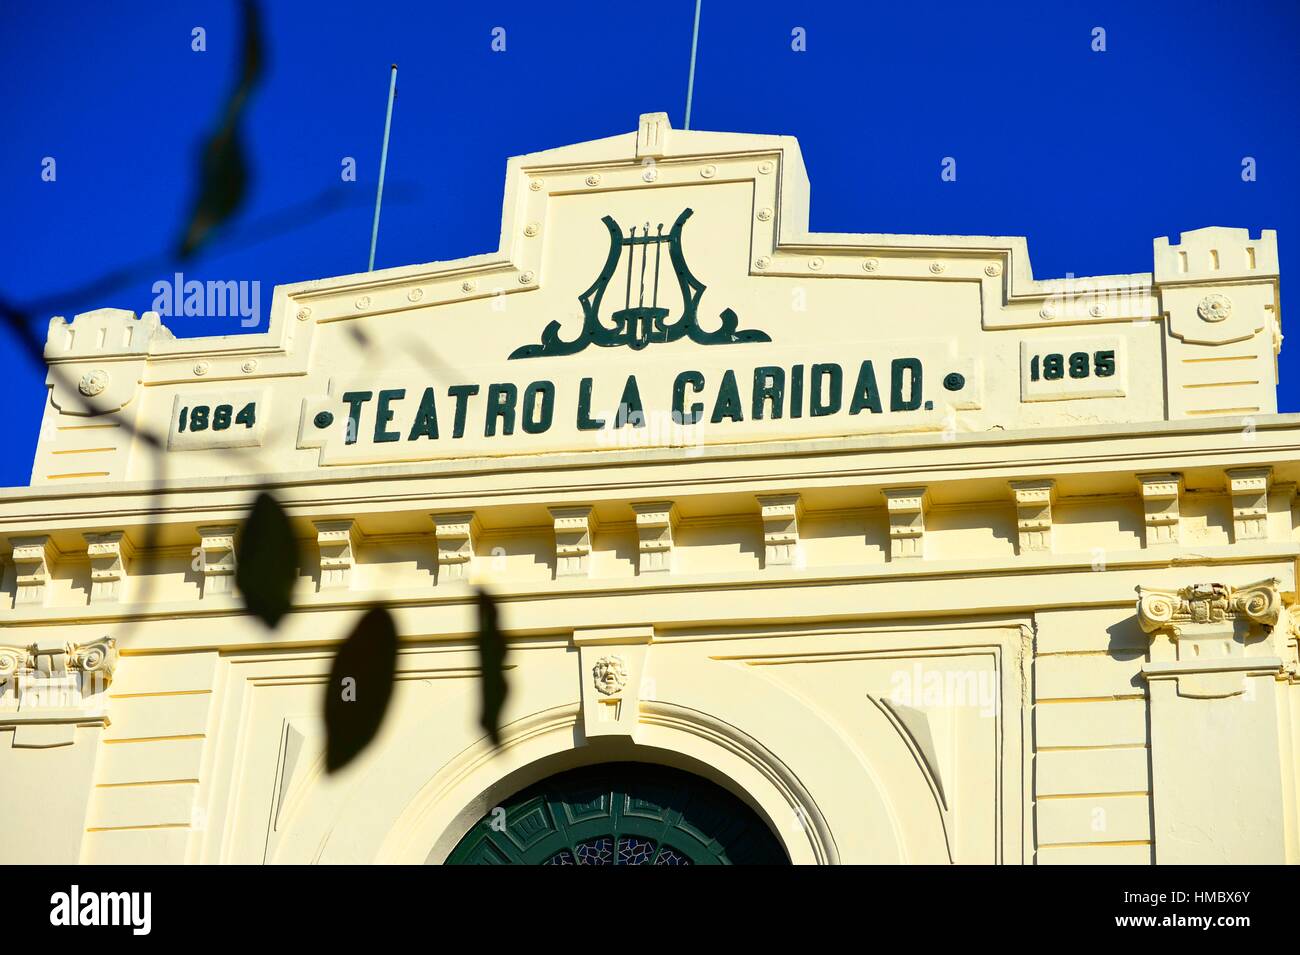 Teatro La Caridad or the Charity Theater in Santa Clara, Cuba. Stock Photo